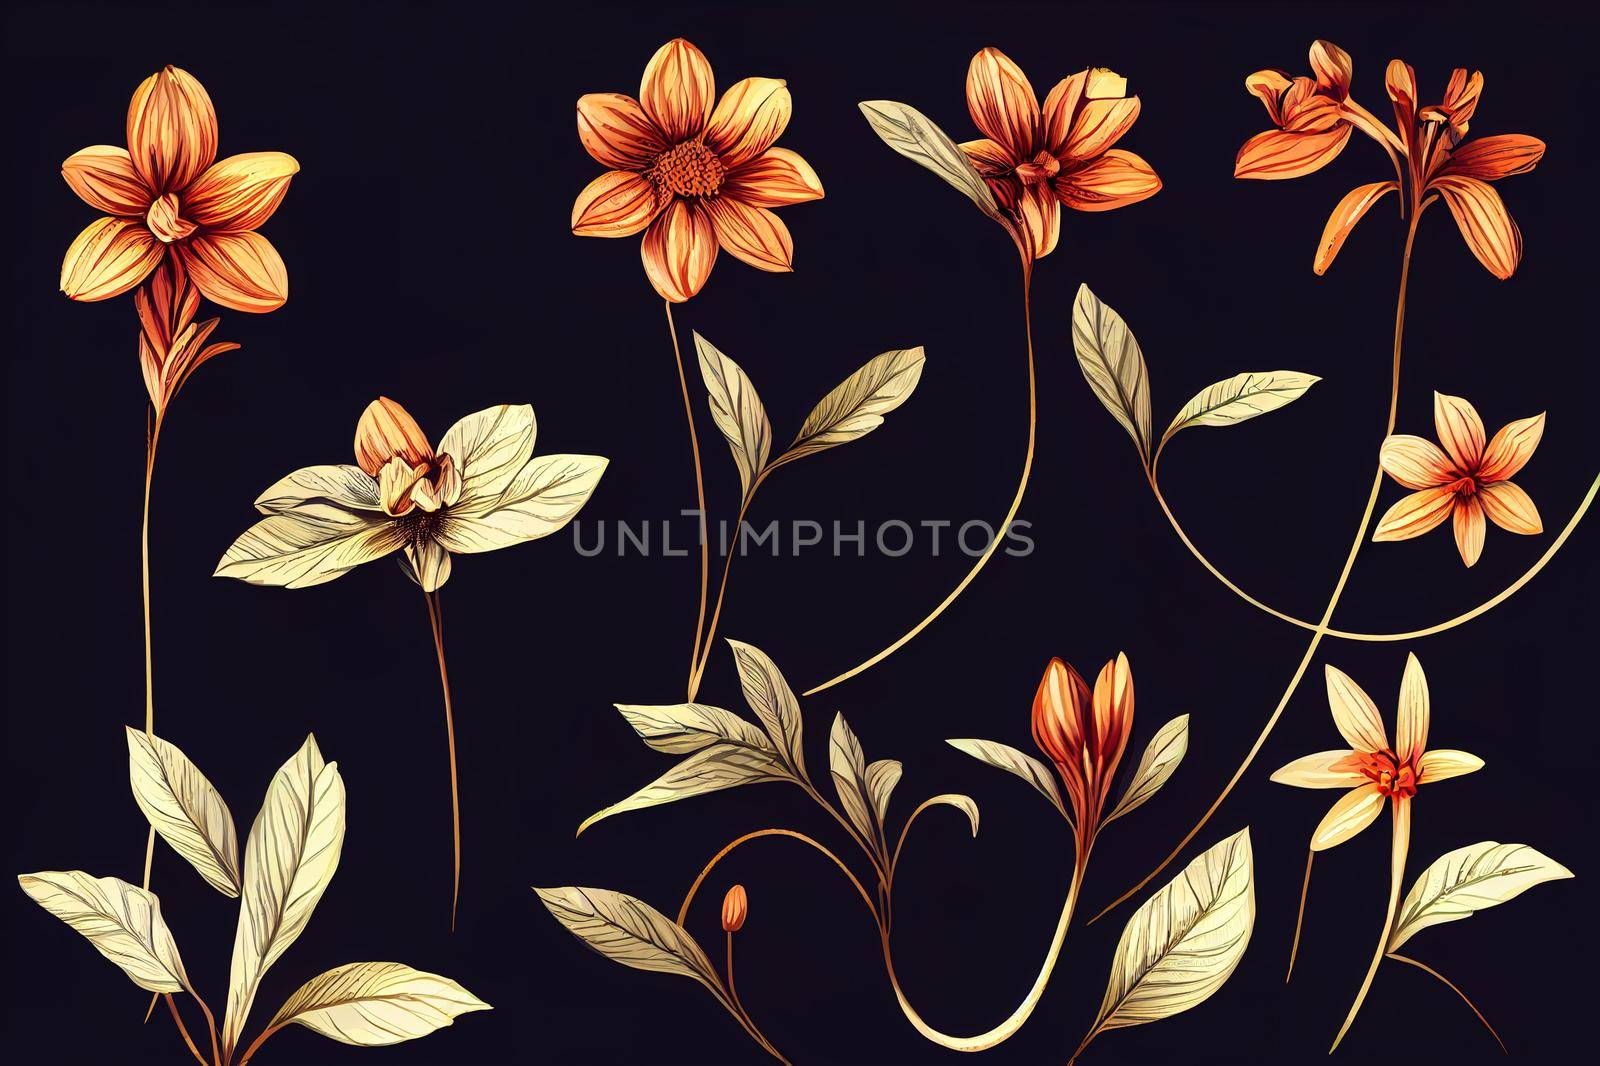 Little garden. 2d botanical illustration. Flowers and plants on a dark background.